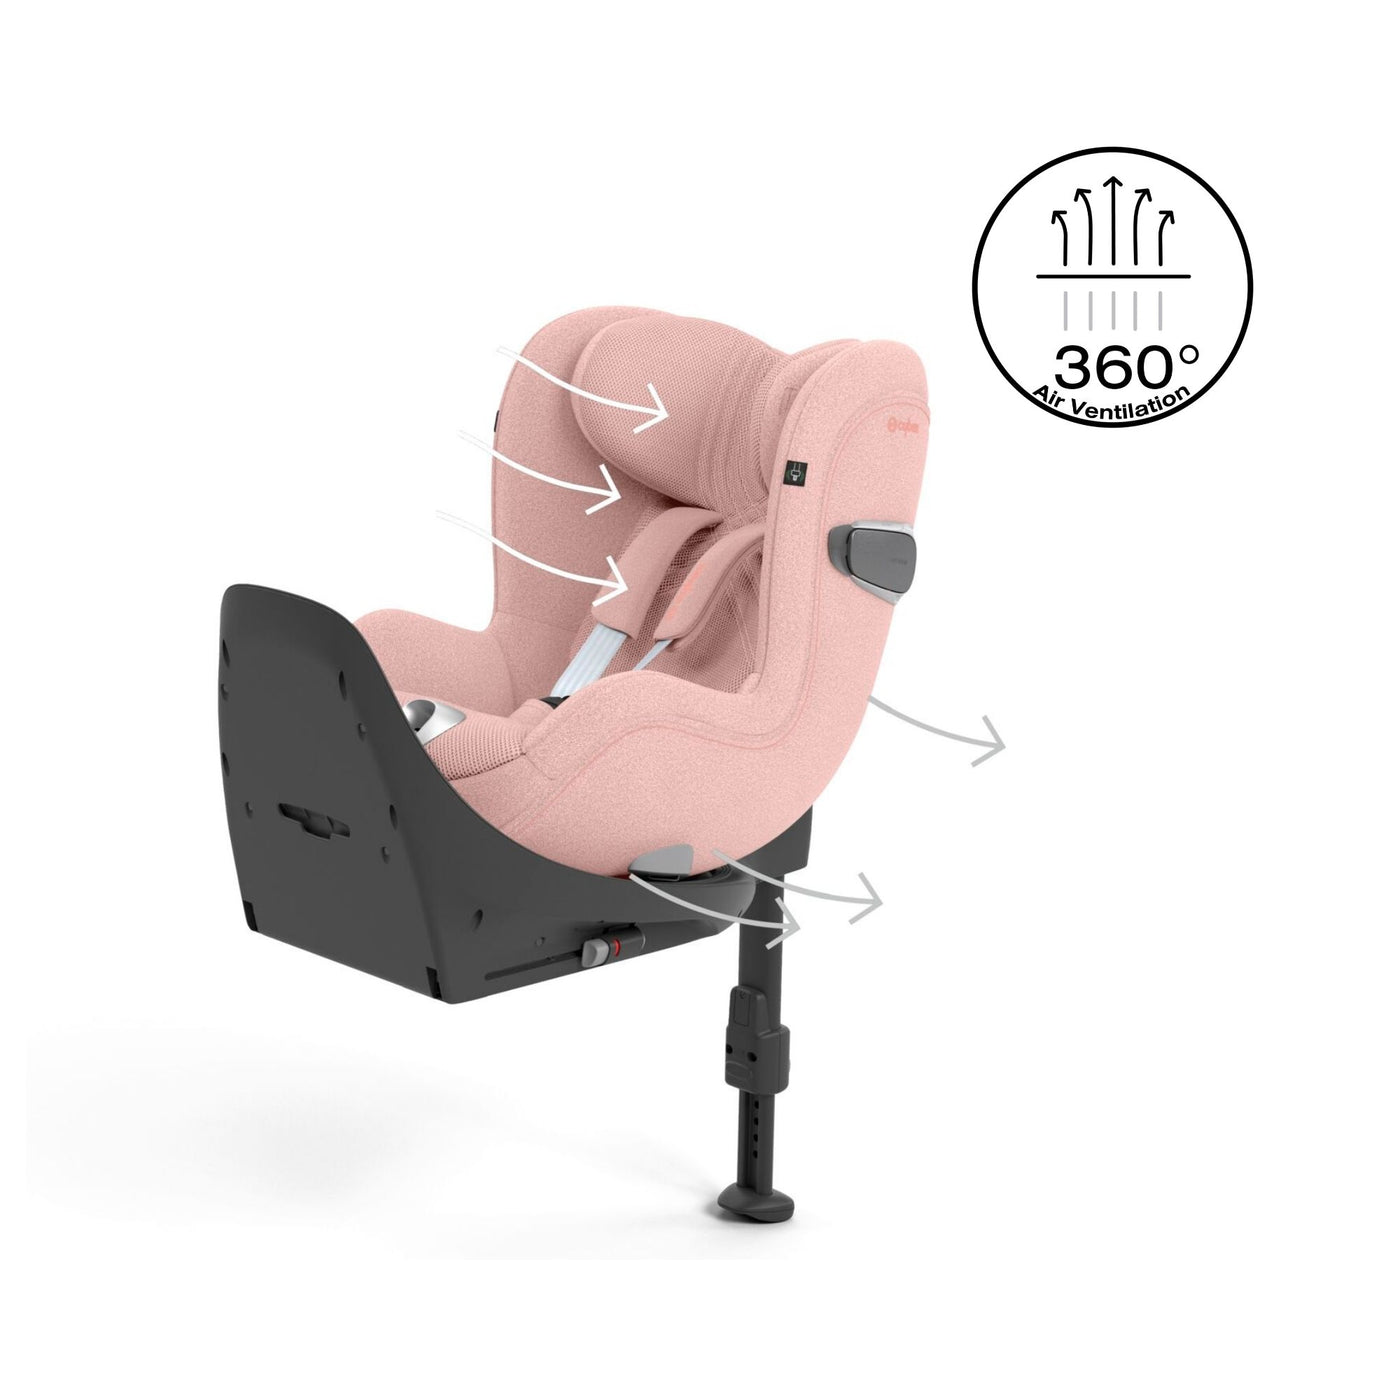 Cybex Sirona T i-Size Car Seat- Peach Pink Plus